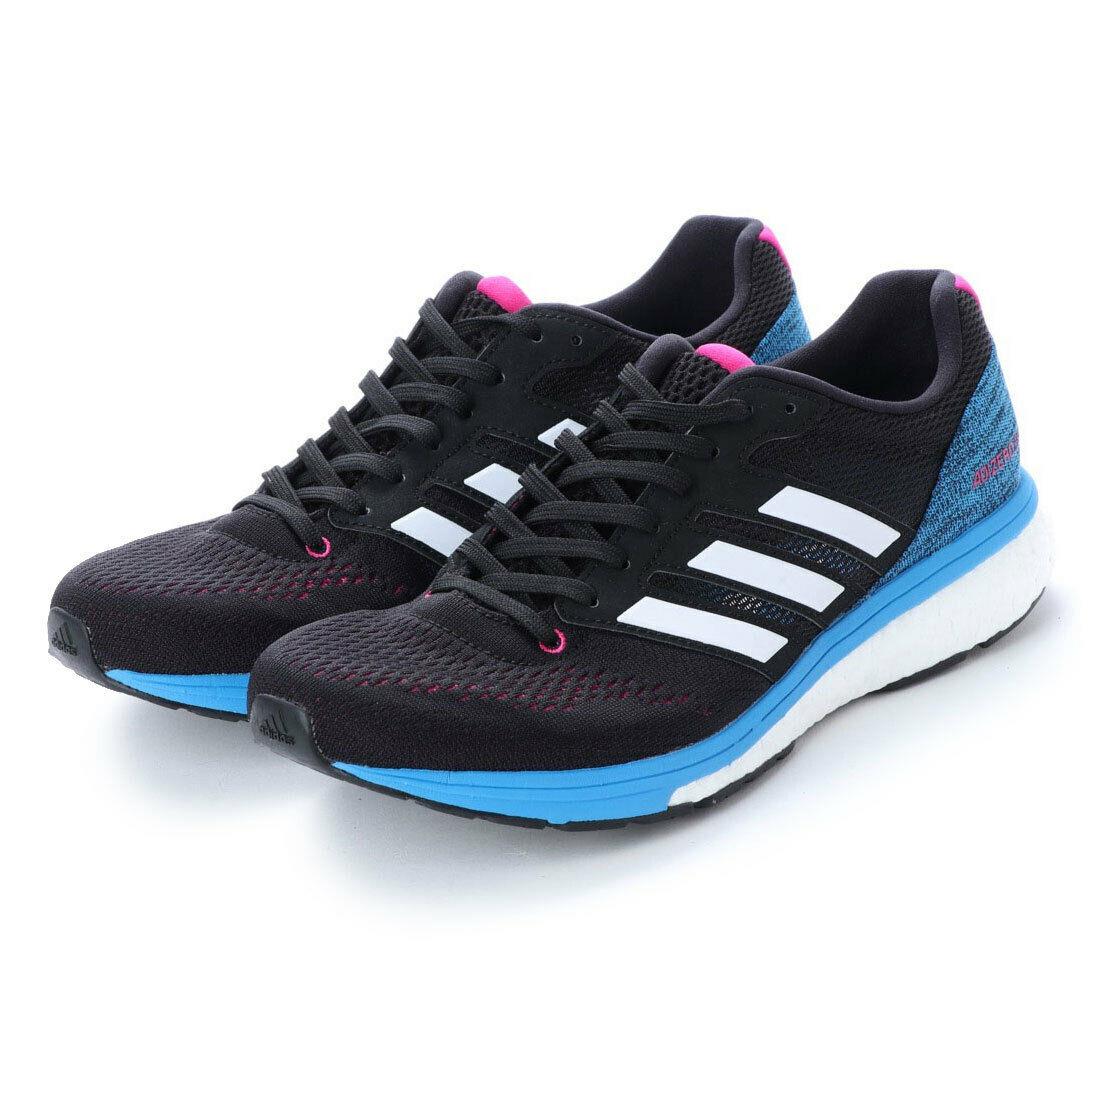 Women Adidas Adizero Boston 7 Running Shoes Black Sneakers Adidas BB6501 - Black